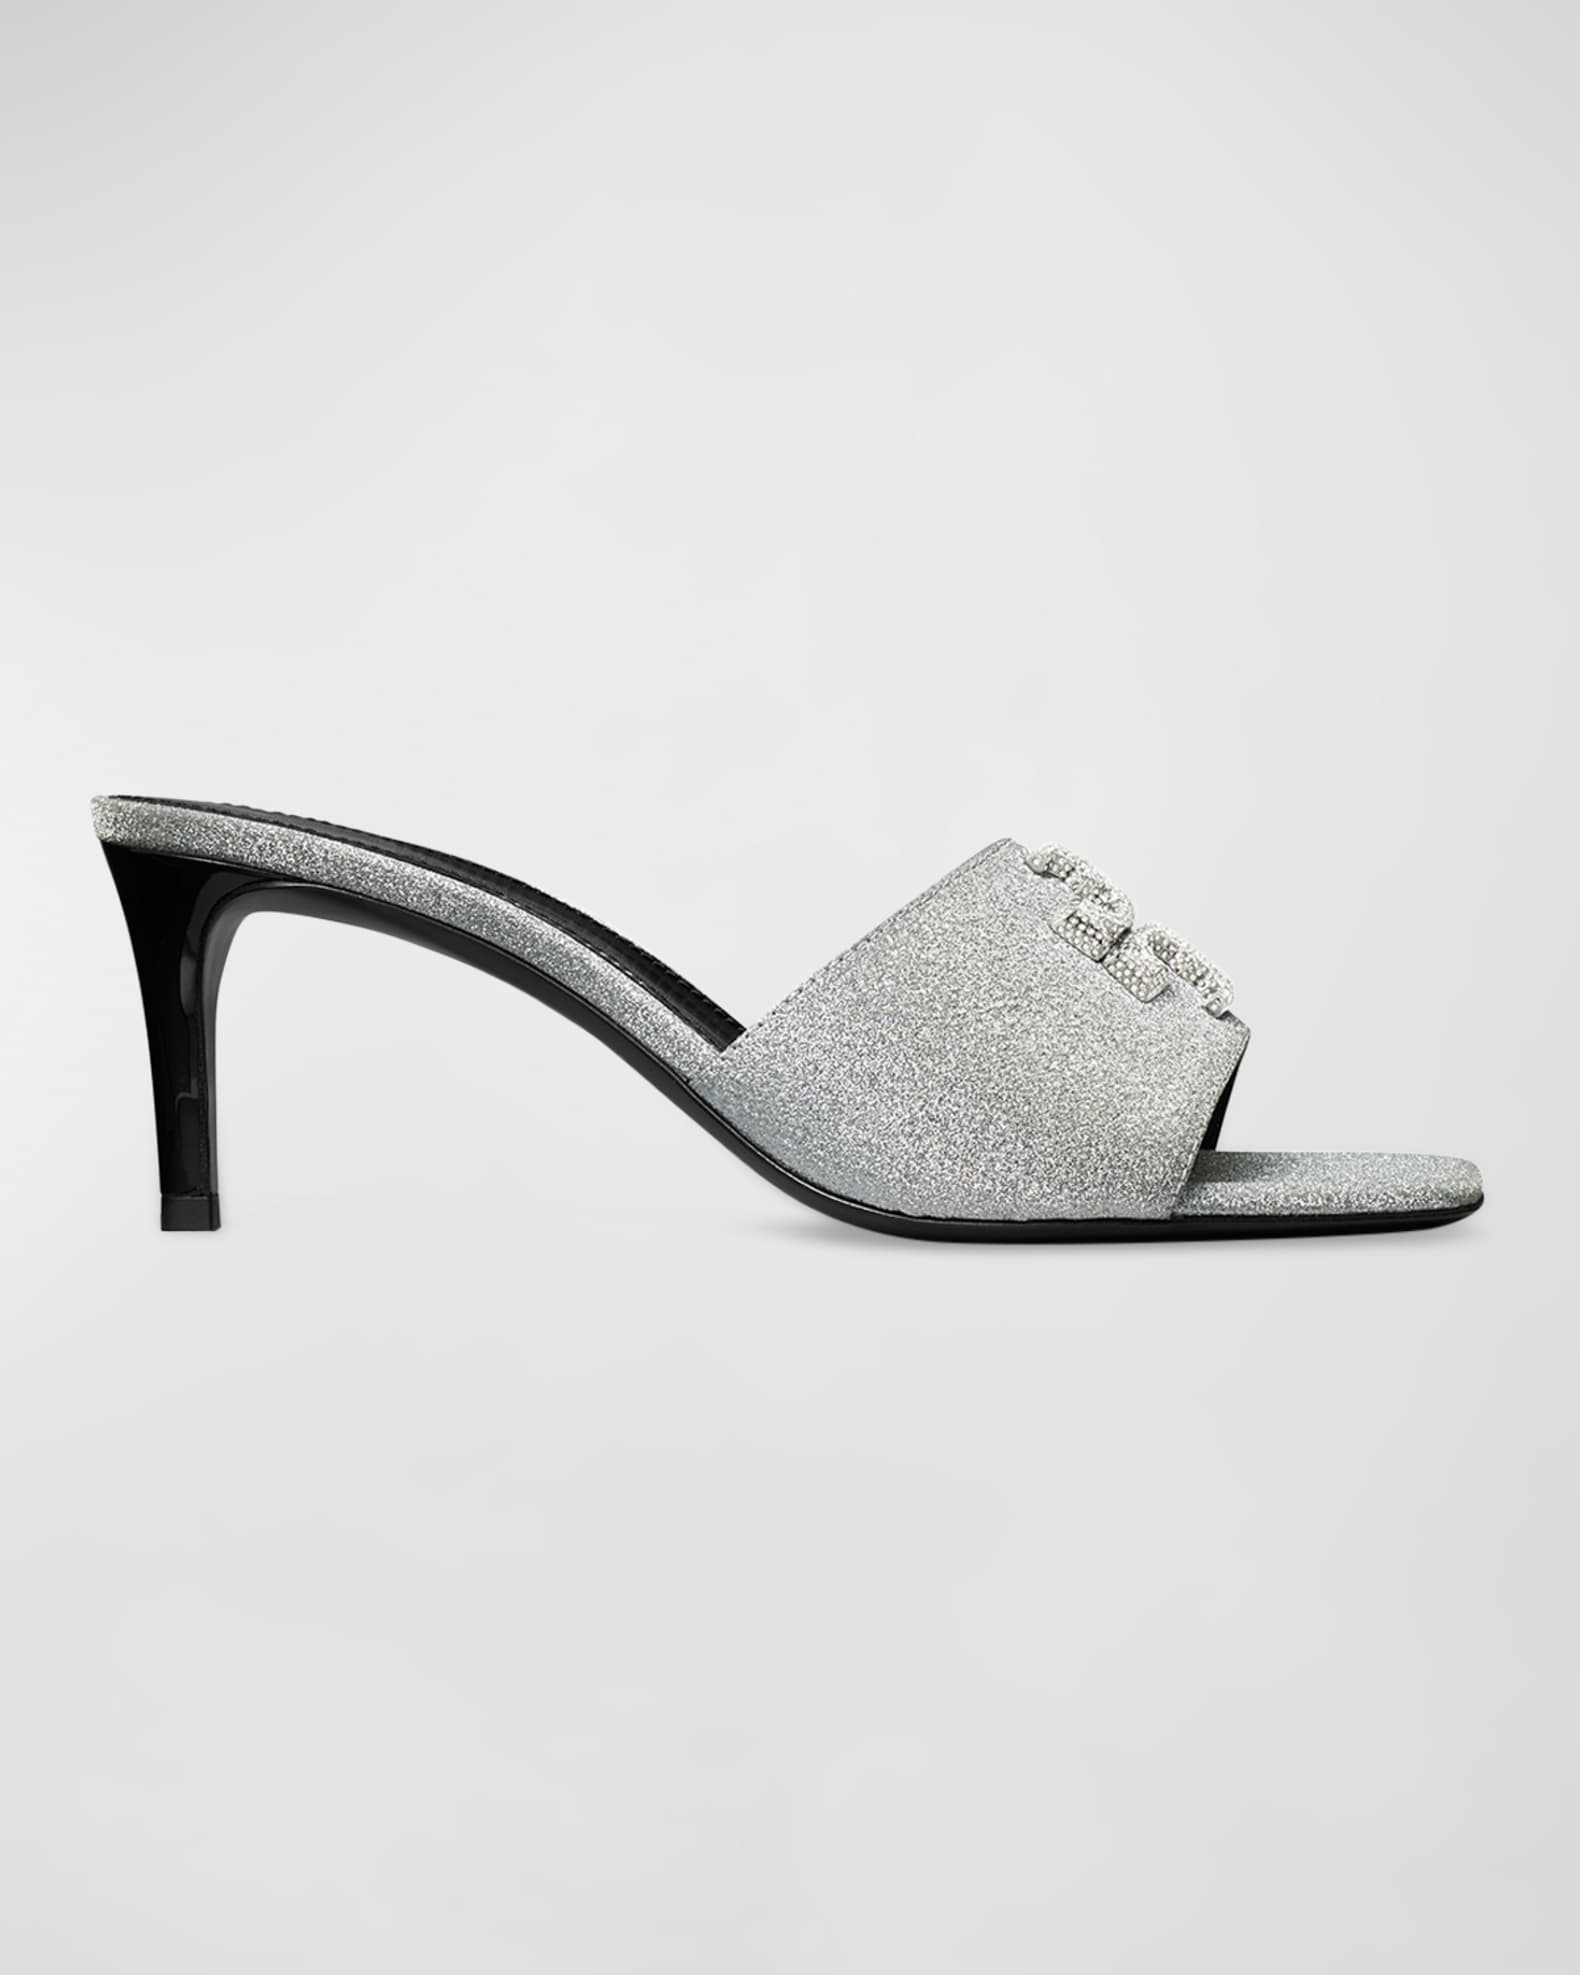 Tory Burch Eleanor Pave Mule Sandal 65mm Women's Sandals Diamond/Perfect Black : 7.5 M